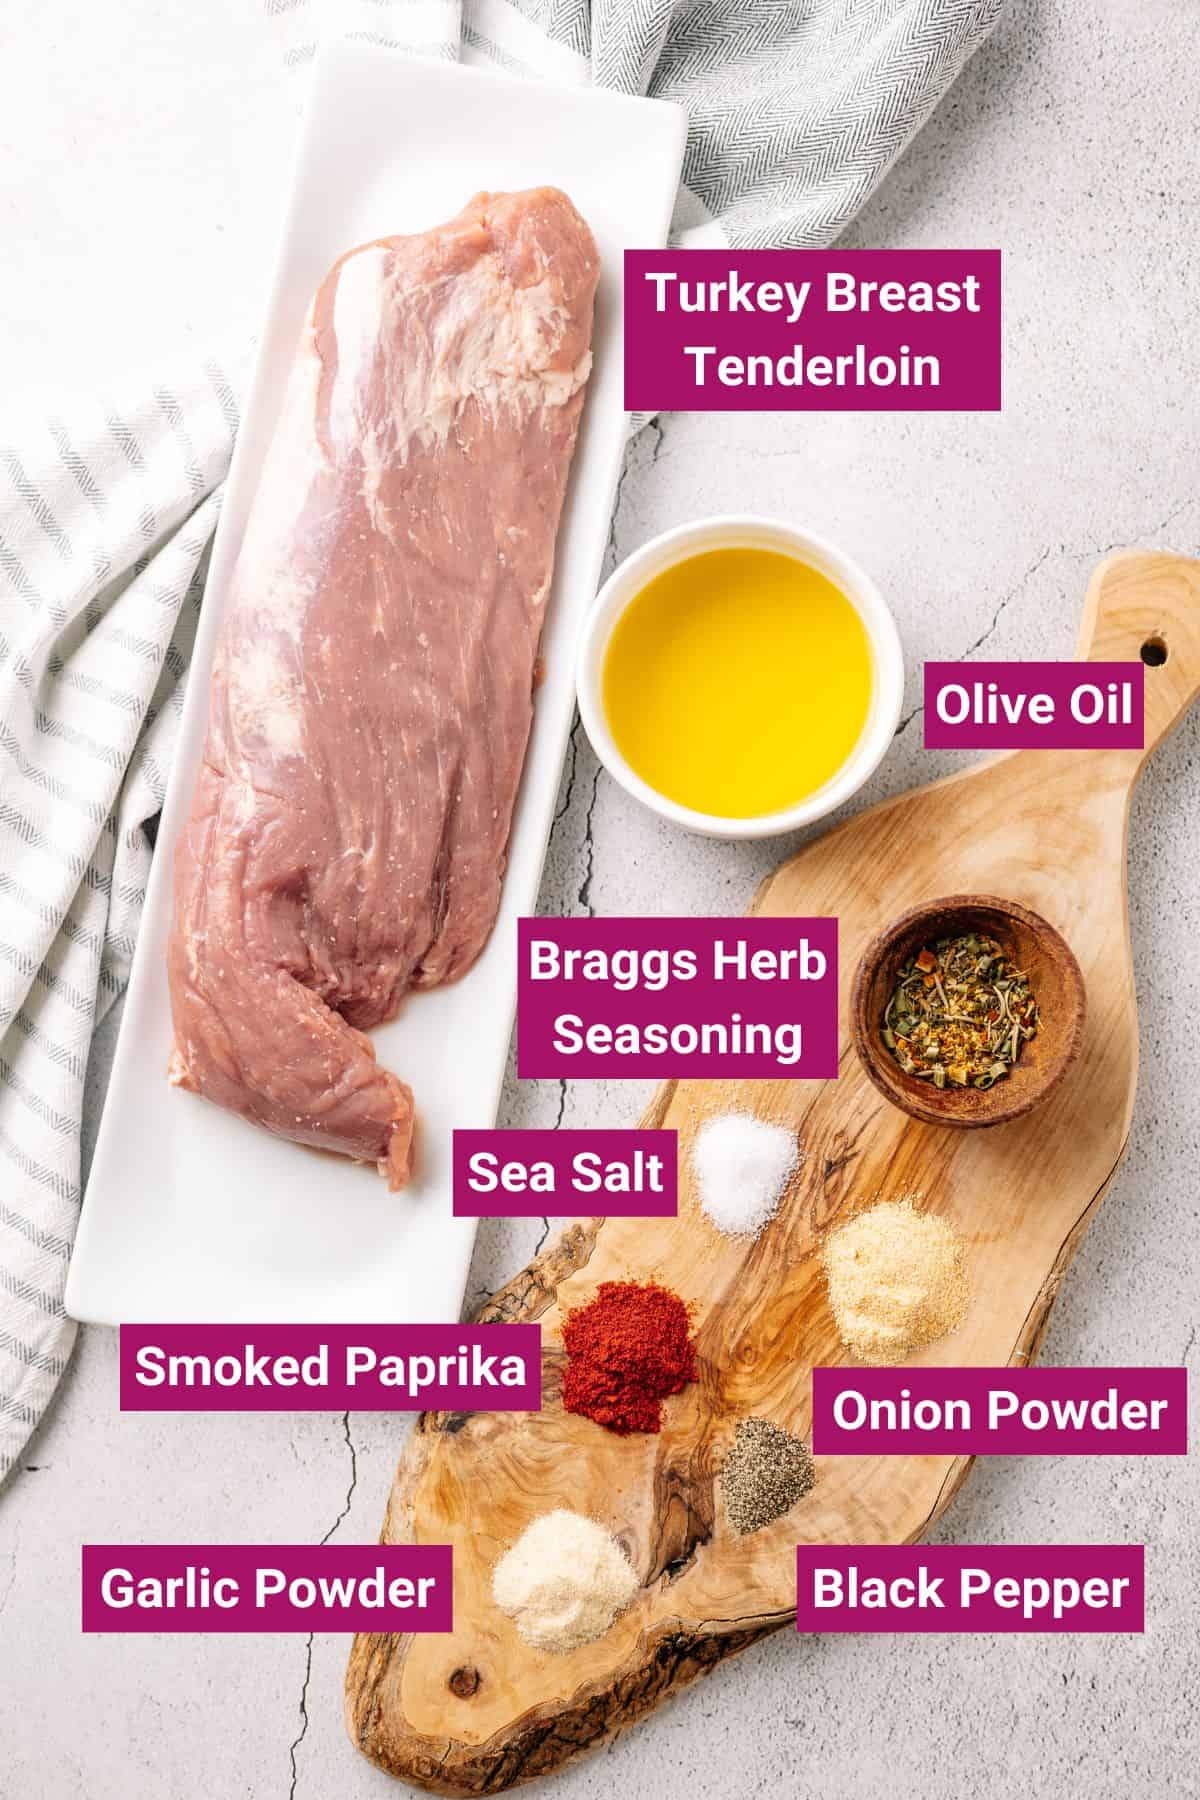 Turkey breast tenderloins, braggs herb seasoning, onion powder, garlic powder, smoked paprika, black pepper, sea salt, olive oil on a wooden chopping board